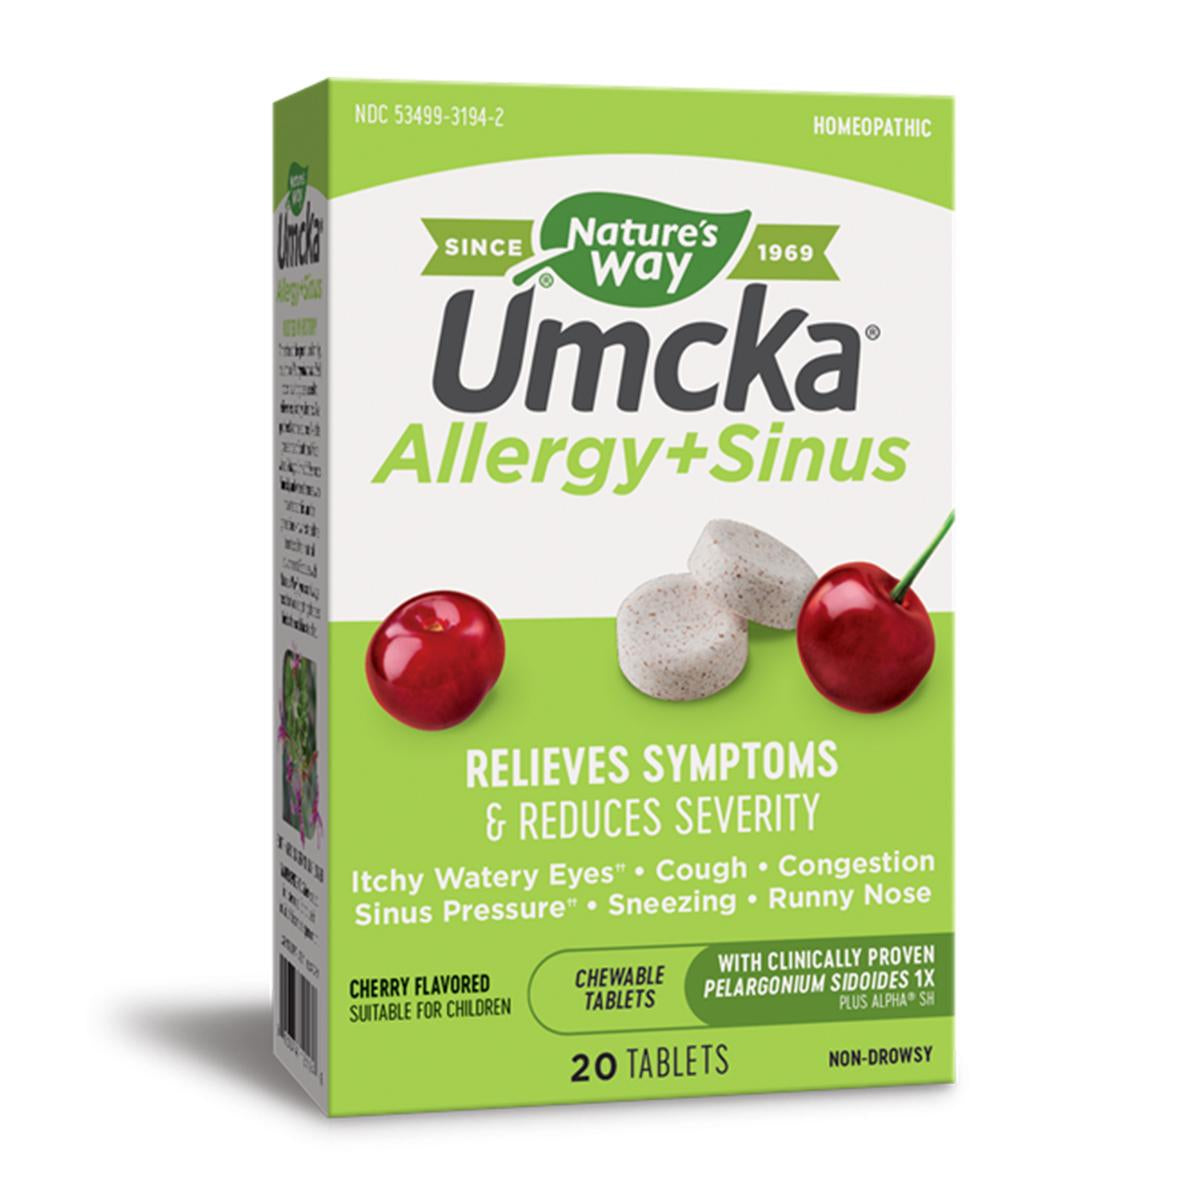 Primary image of Umcka Allergy + Sinus